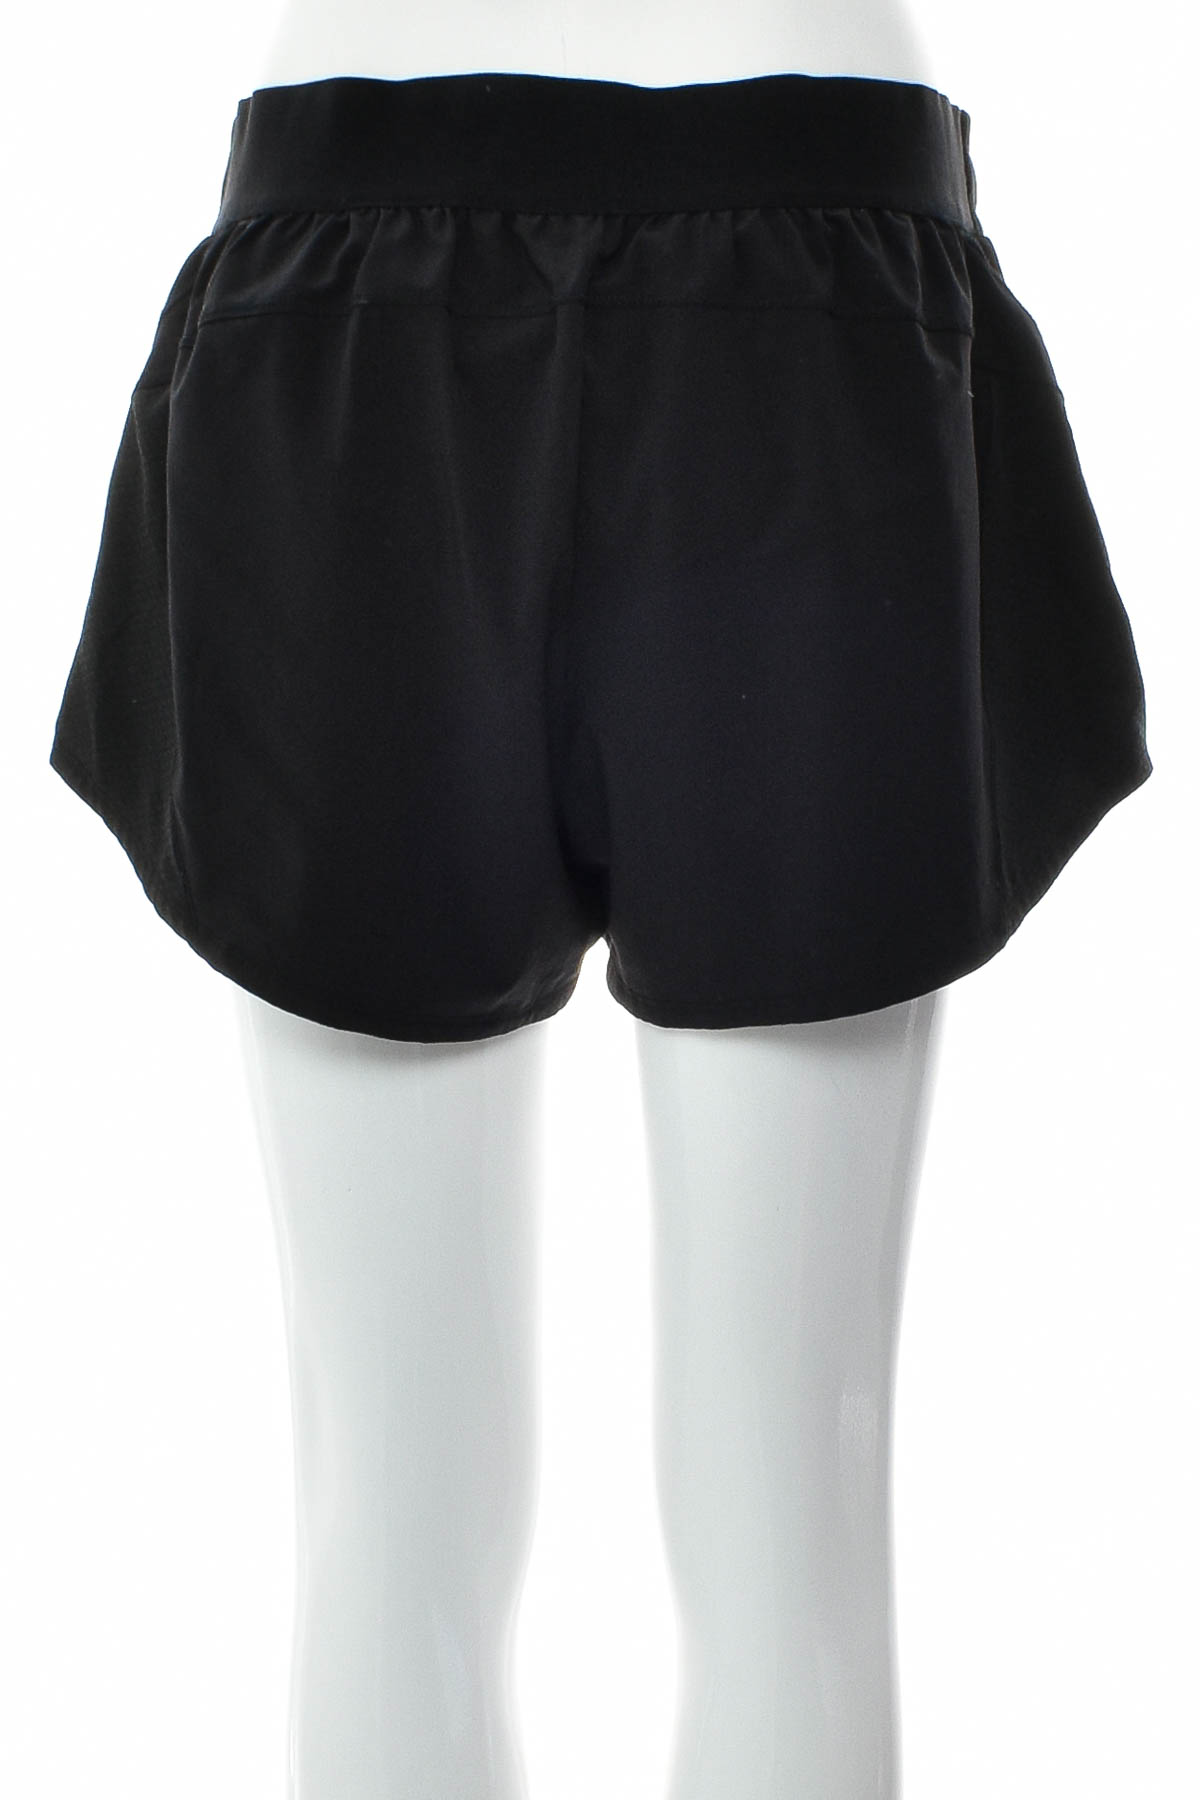 Women's shorts - H&M - 1